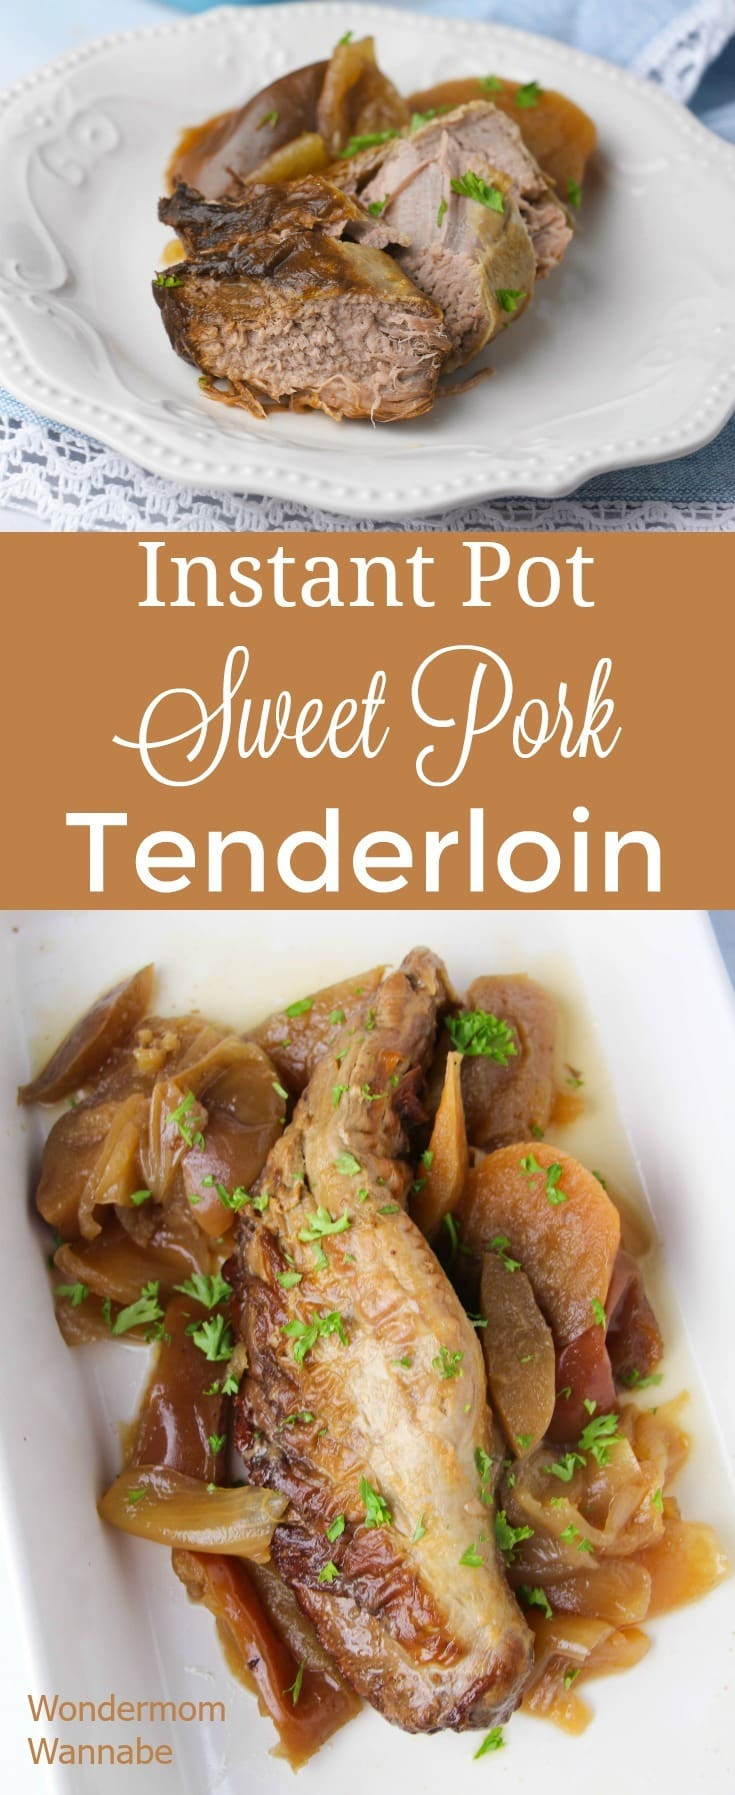 Instant Pot Pork Tenderloin
 Instant Pot Sweet Pork Tenderloin